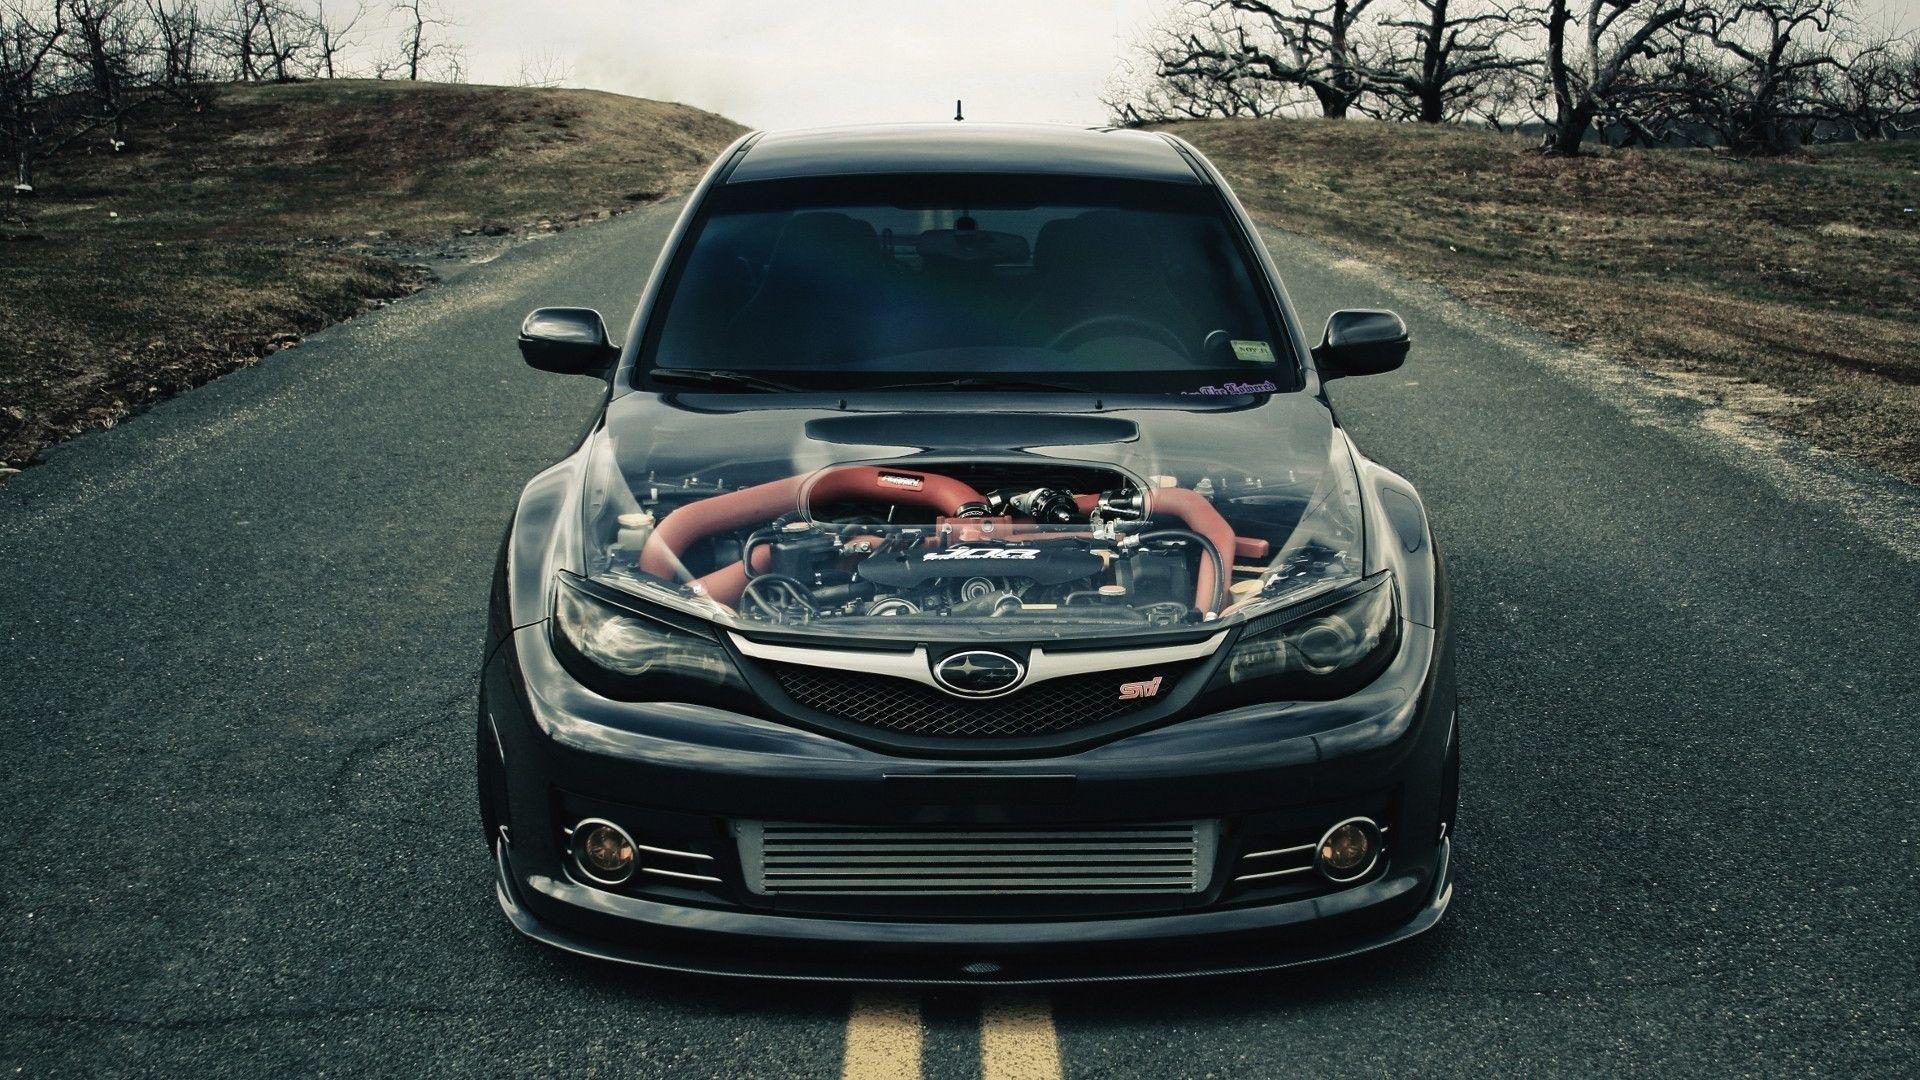 Awesome Subaru Wallpapers